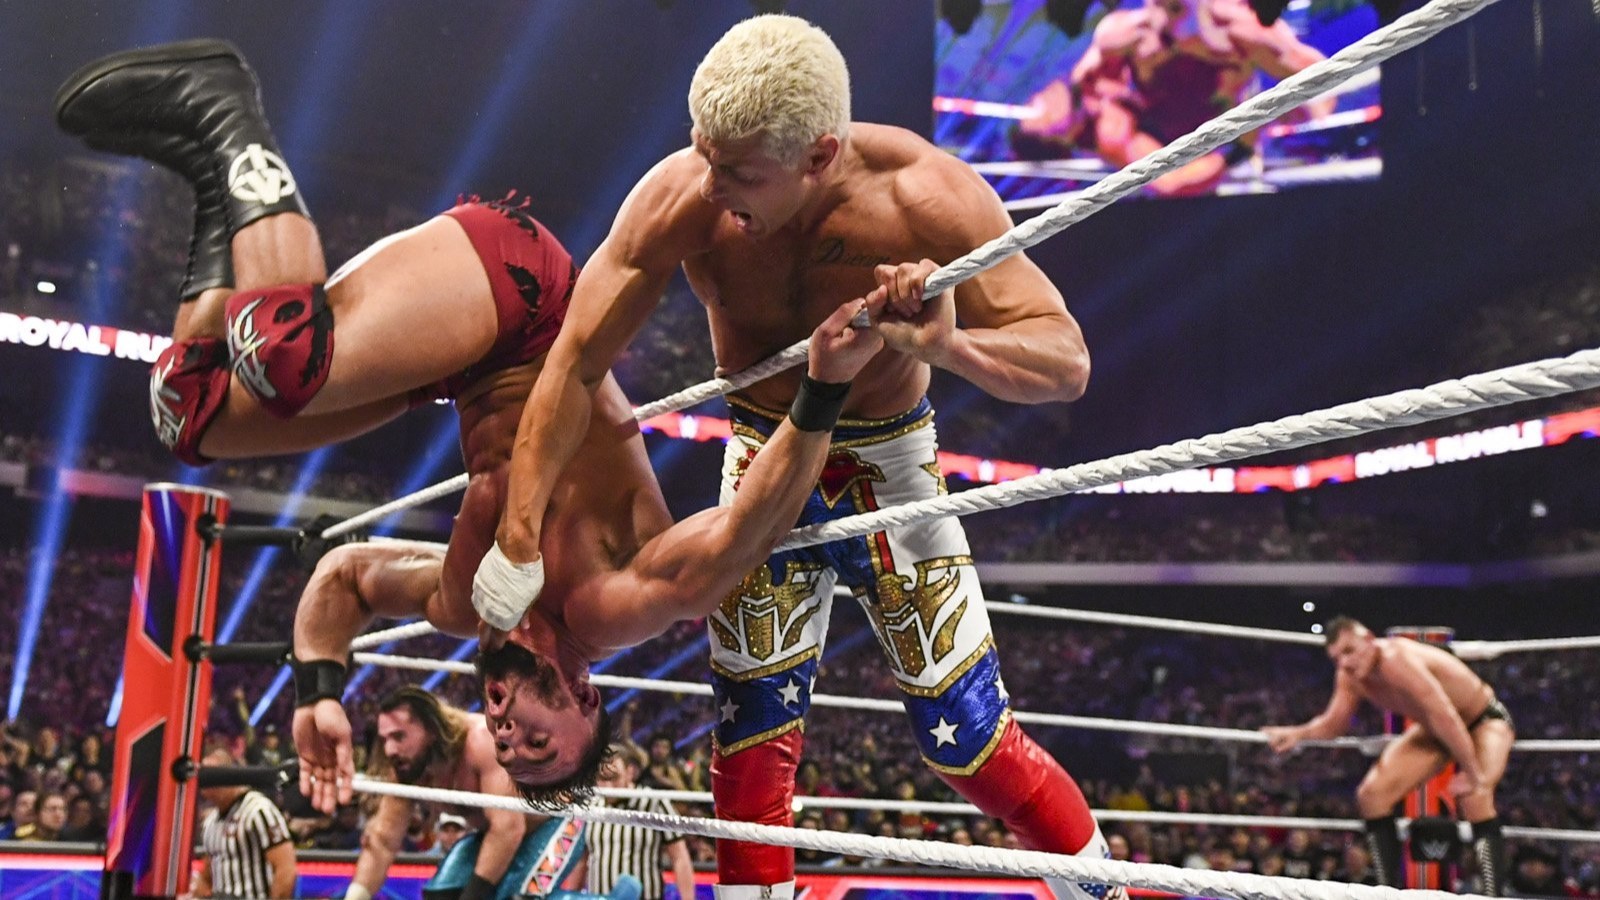 Cody Rhodes eliminando Austin Theory no Royal Rumble 2023